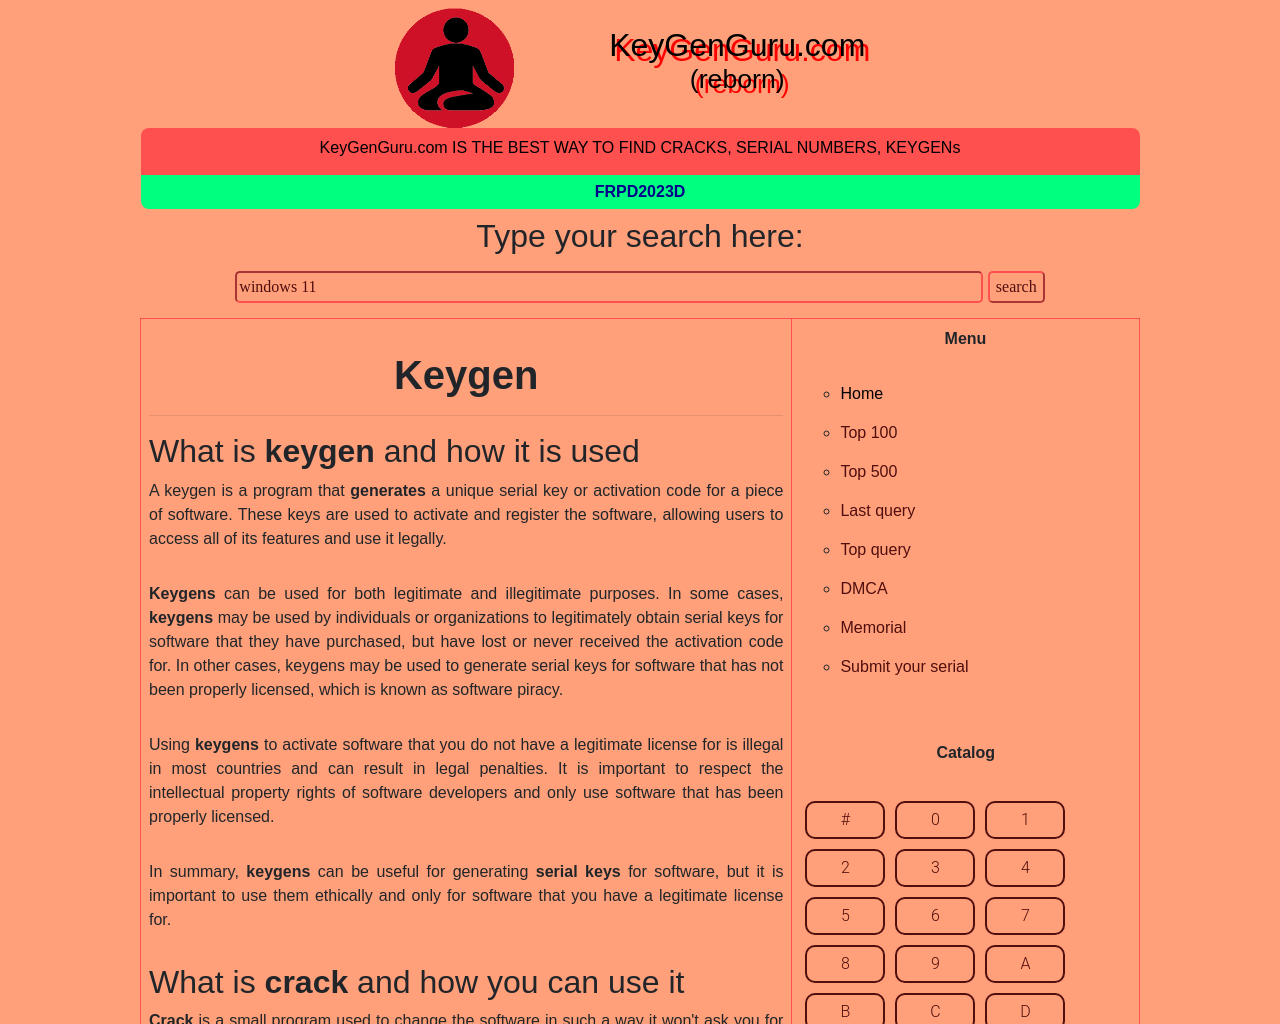 keygenguru.com